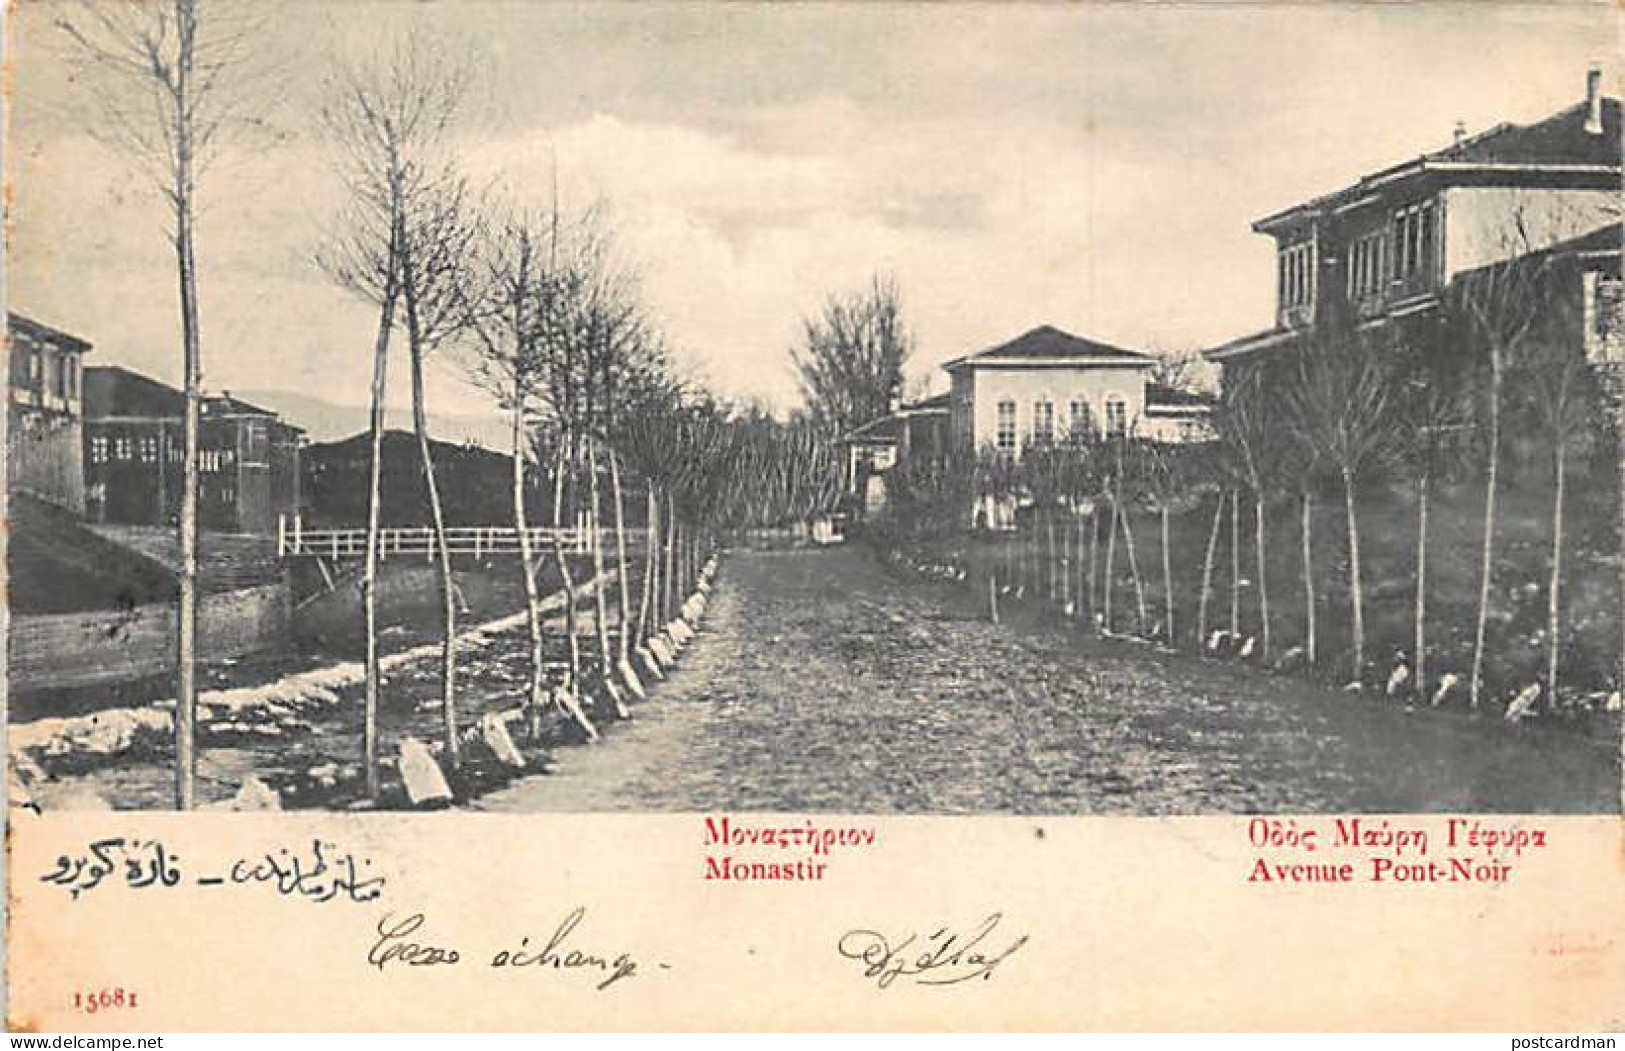 Macedonia - MONASTIR - Avenue Pont-Noir - SEE STAMPS And POSTMARKS - Publ. G. Zalli 15681. - Macedonia Del Norte